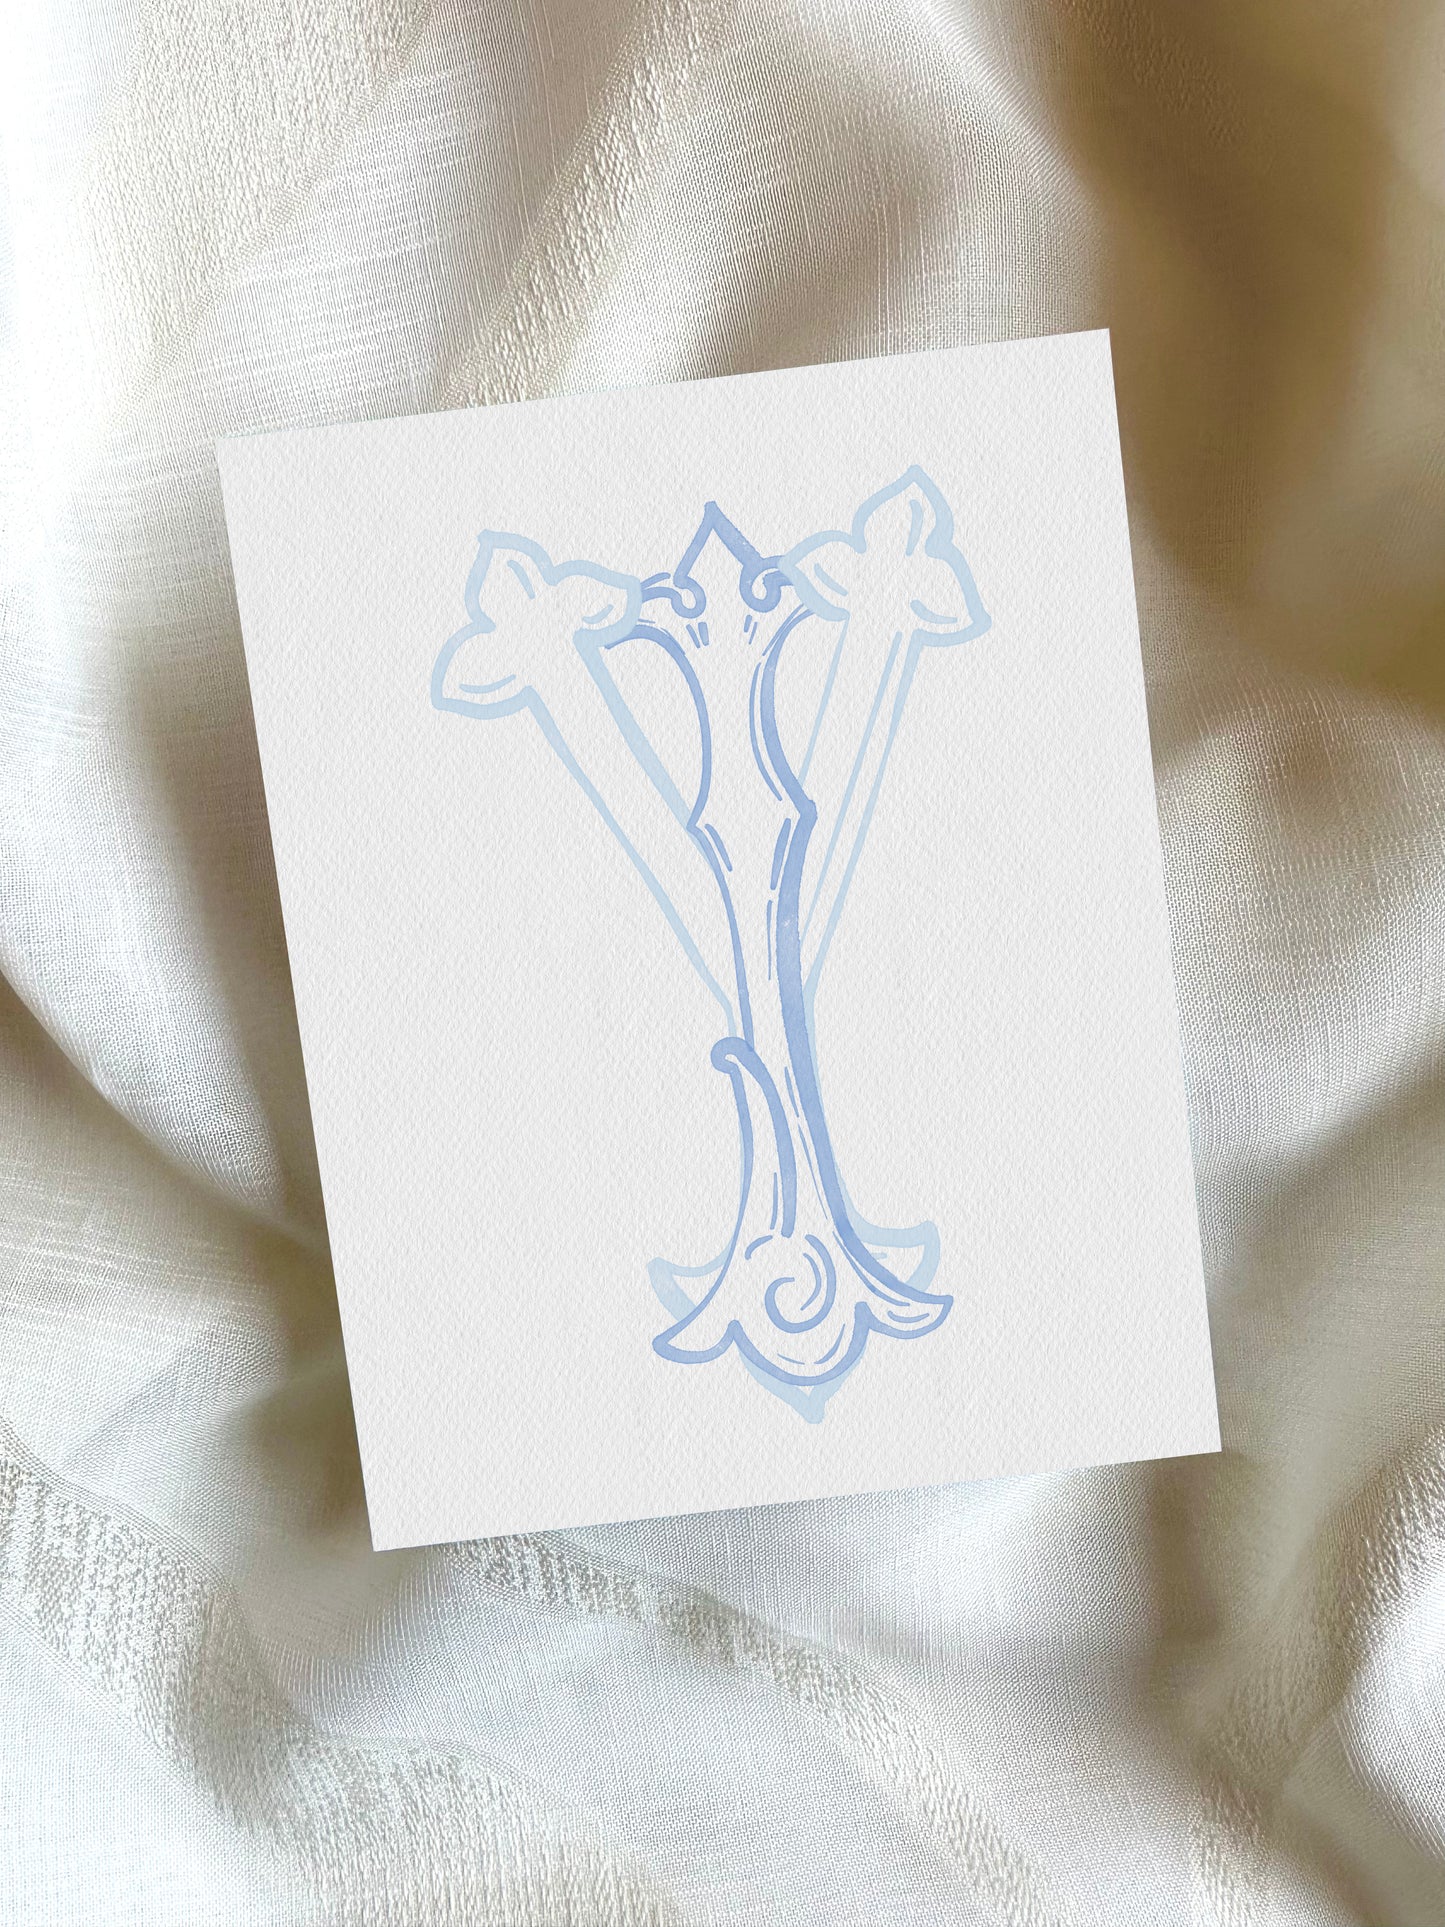 2 Letter Monogram with Letters IY YI | Digital Download - Wedding Monogram SVG, Personal Logo, Wedding Logo for Wedding Invitations The Wedding Crest Lab